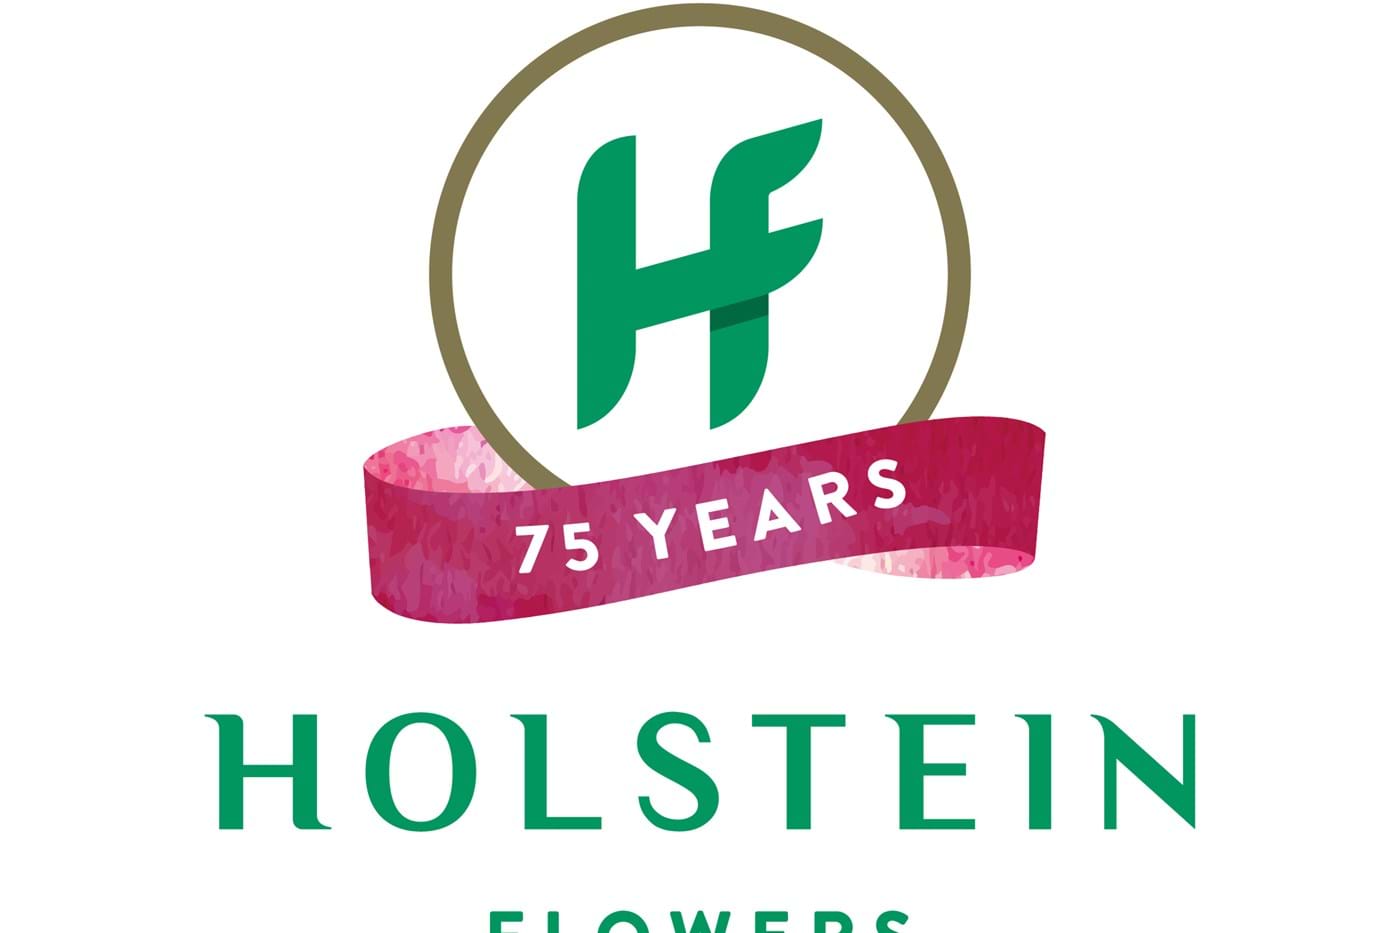 Holstein Flowers 75 years!